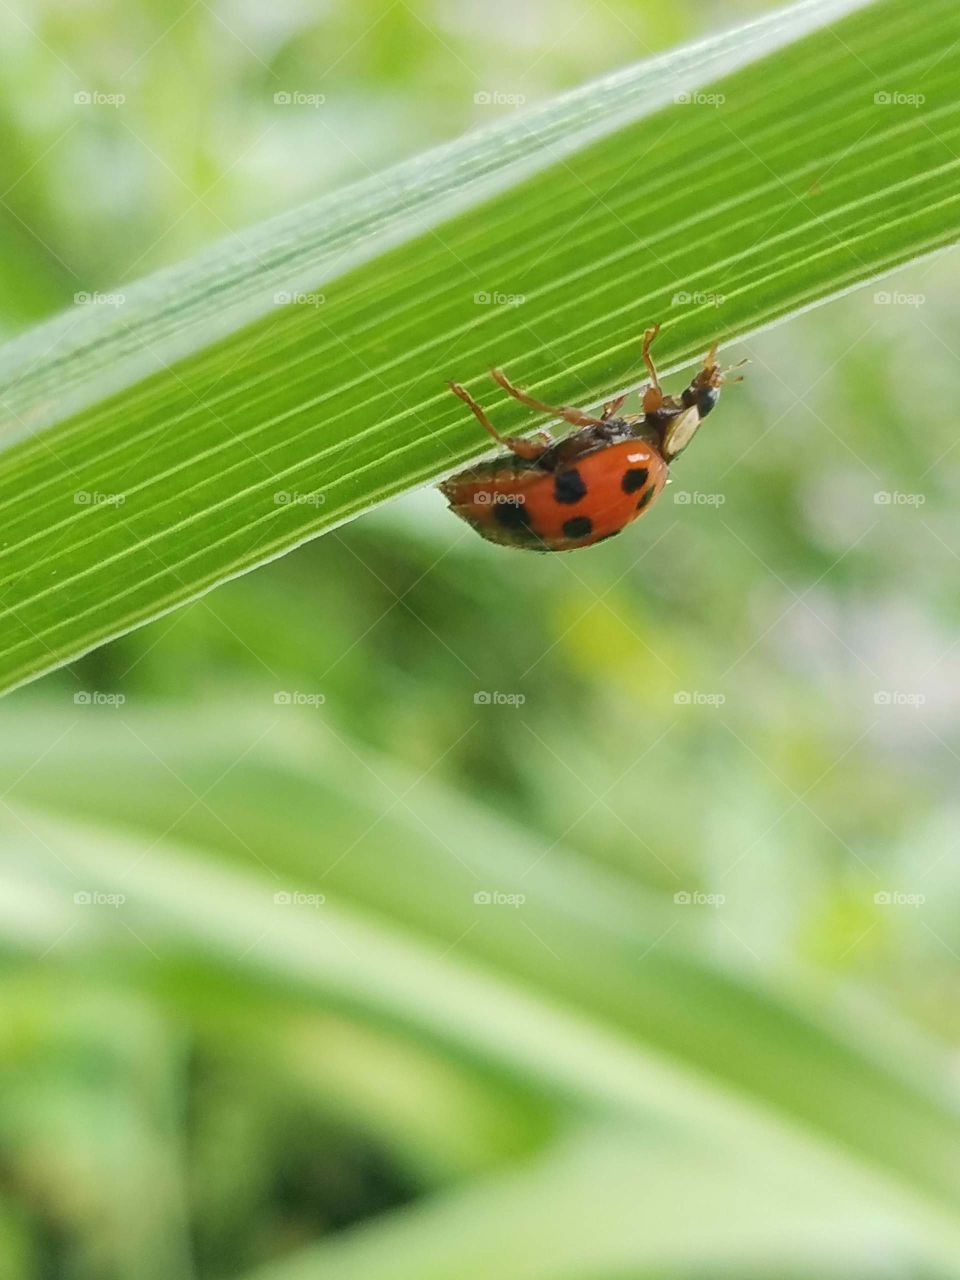 ladybug climbing leaf upside down, close-up